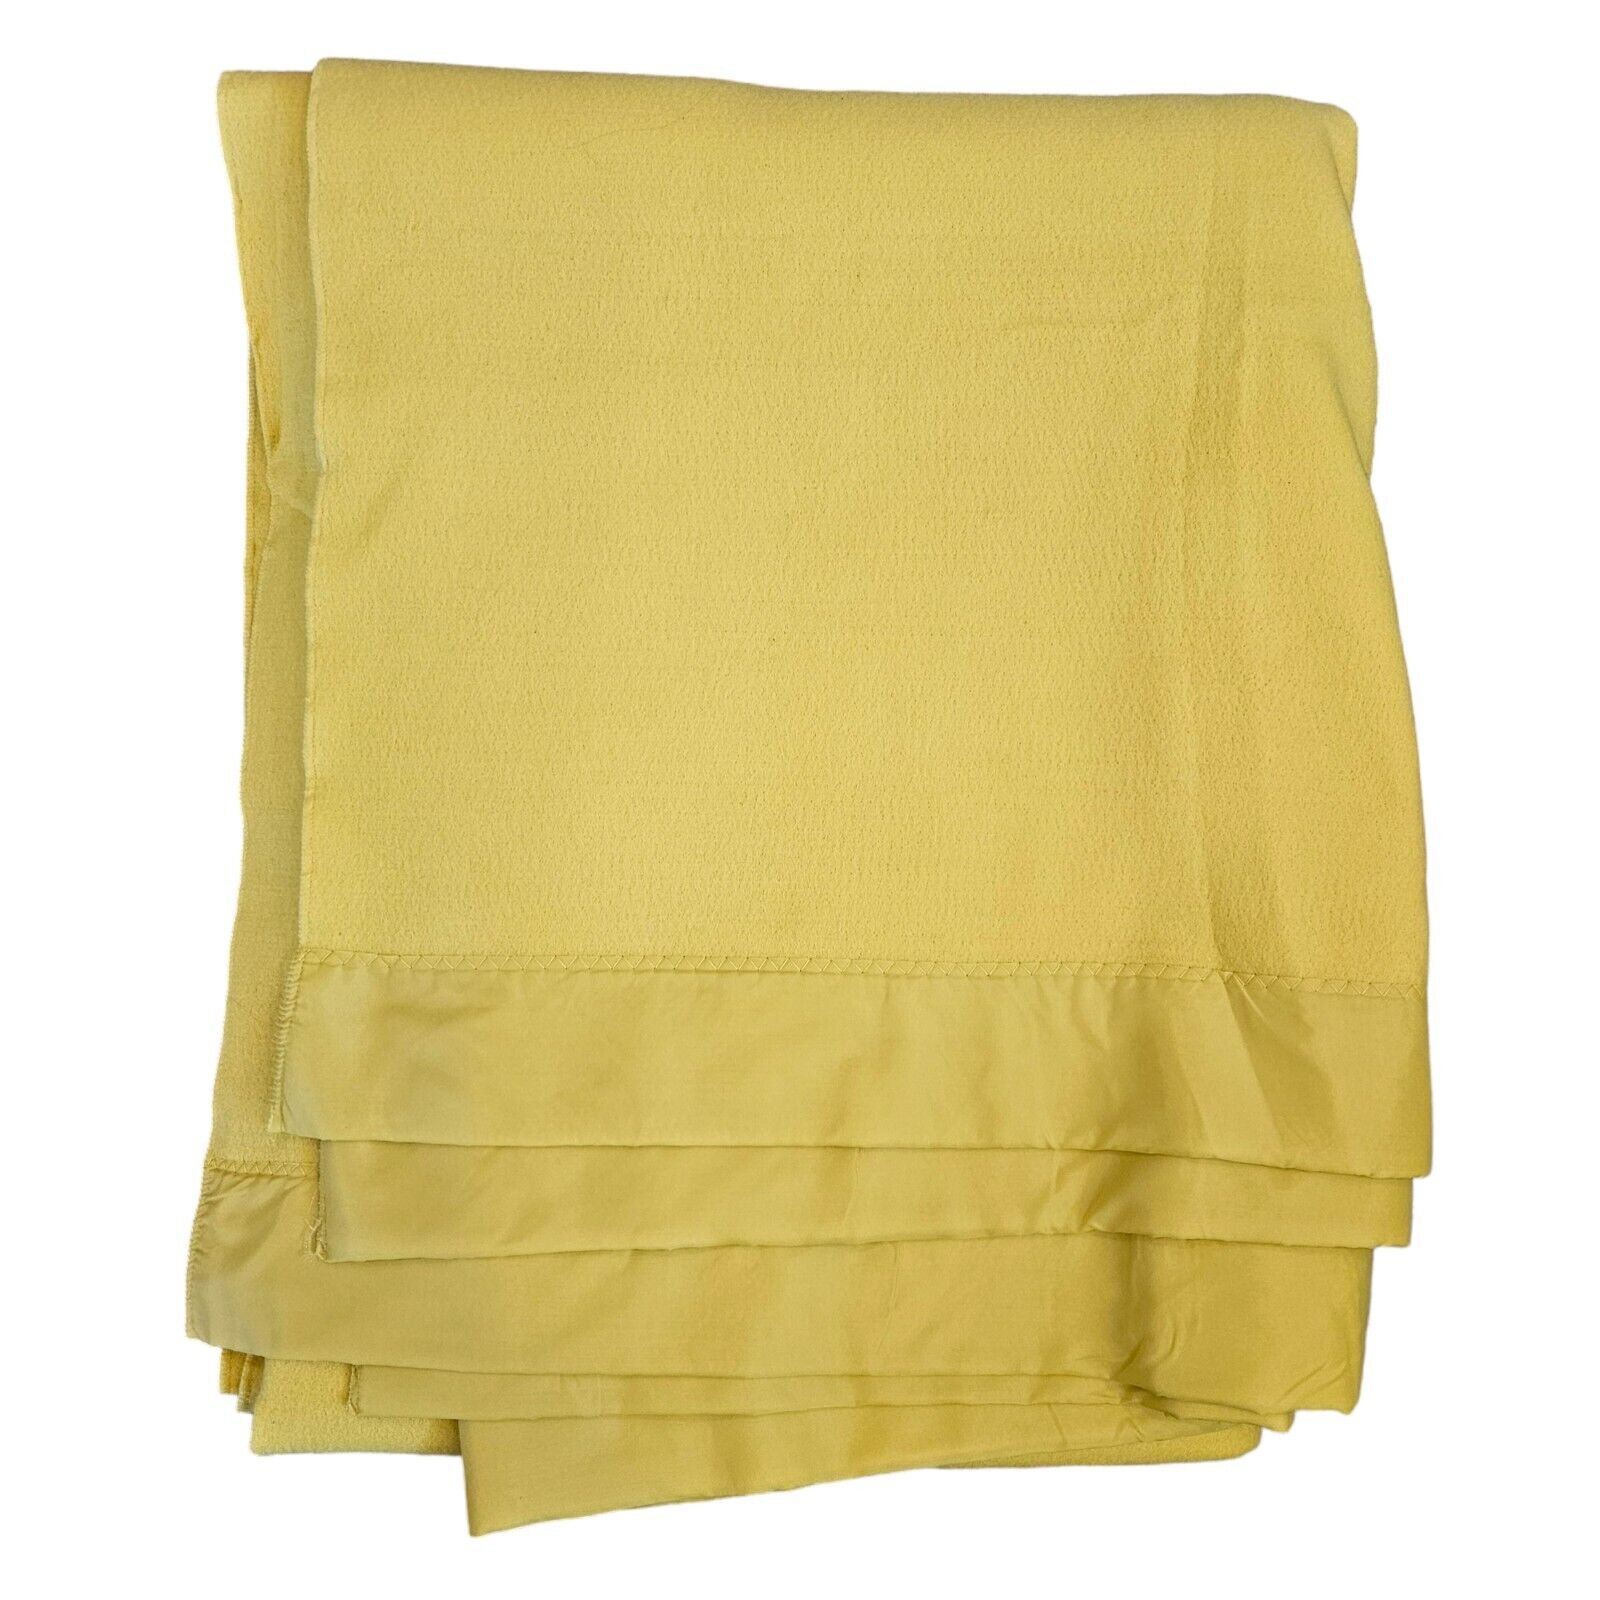 VTG 70s Chatham Esmond Sunrise Blanket Fiberwoven Nylon Satin Trim Binding 71x92